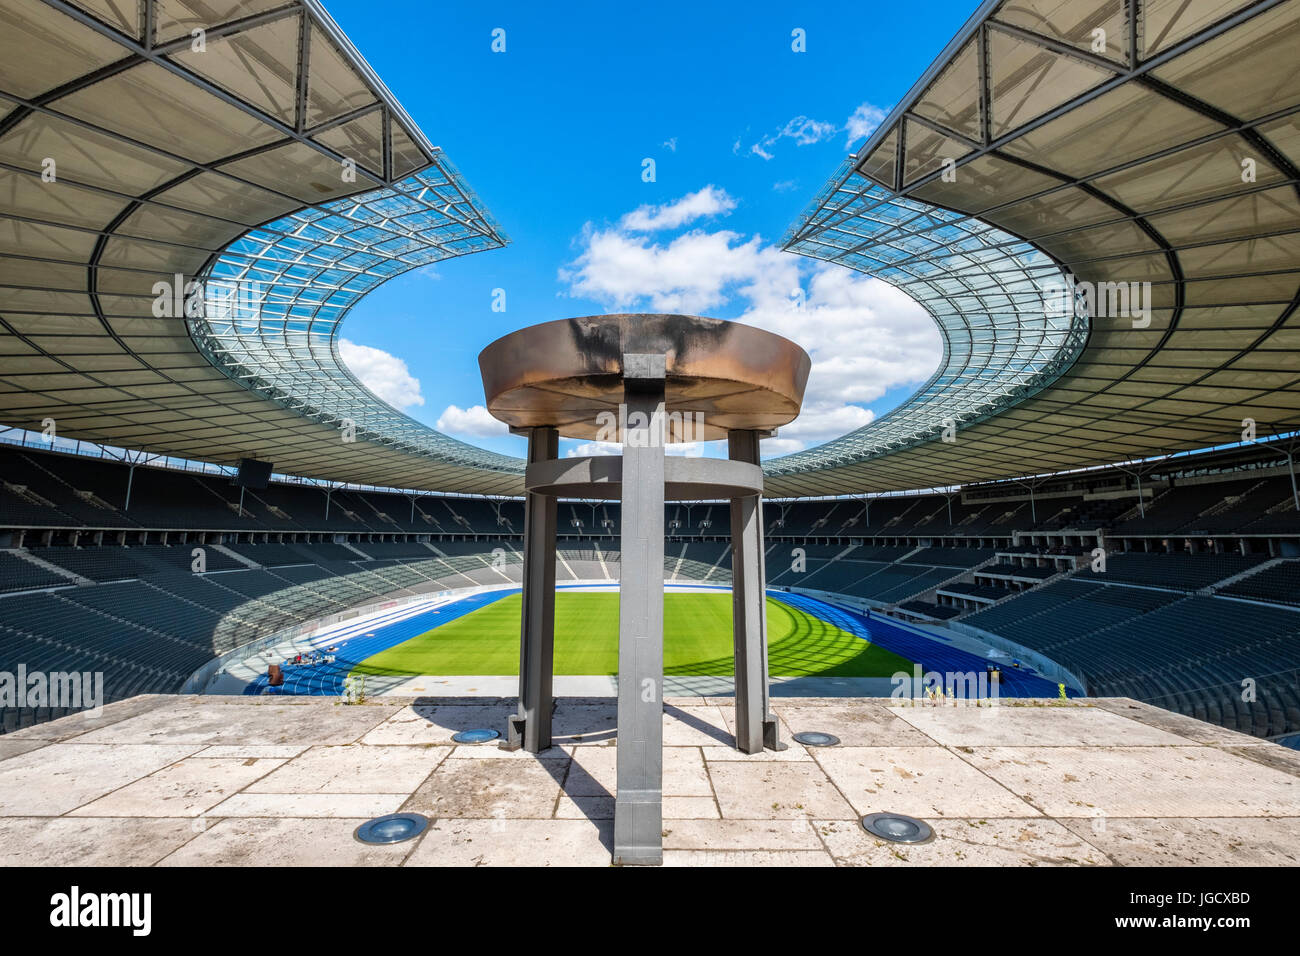 Interior view of Olympiastadion ( Olympic Stadium) in Berlin, Germany Stock Photo